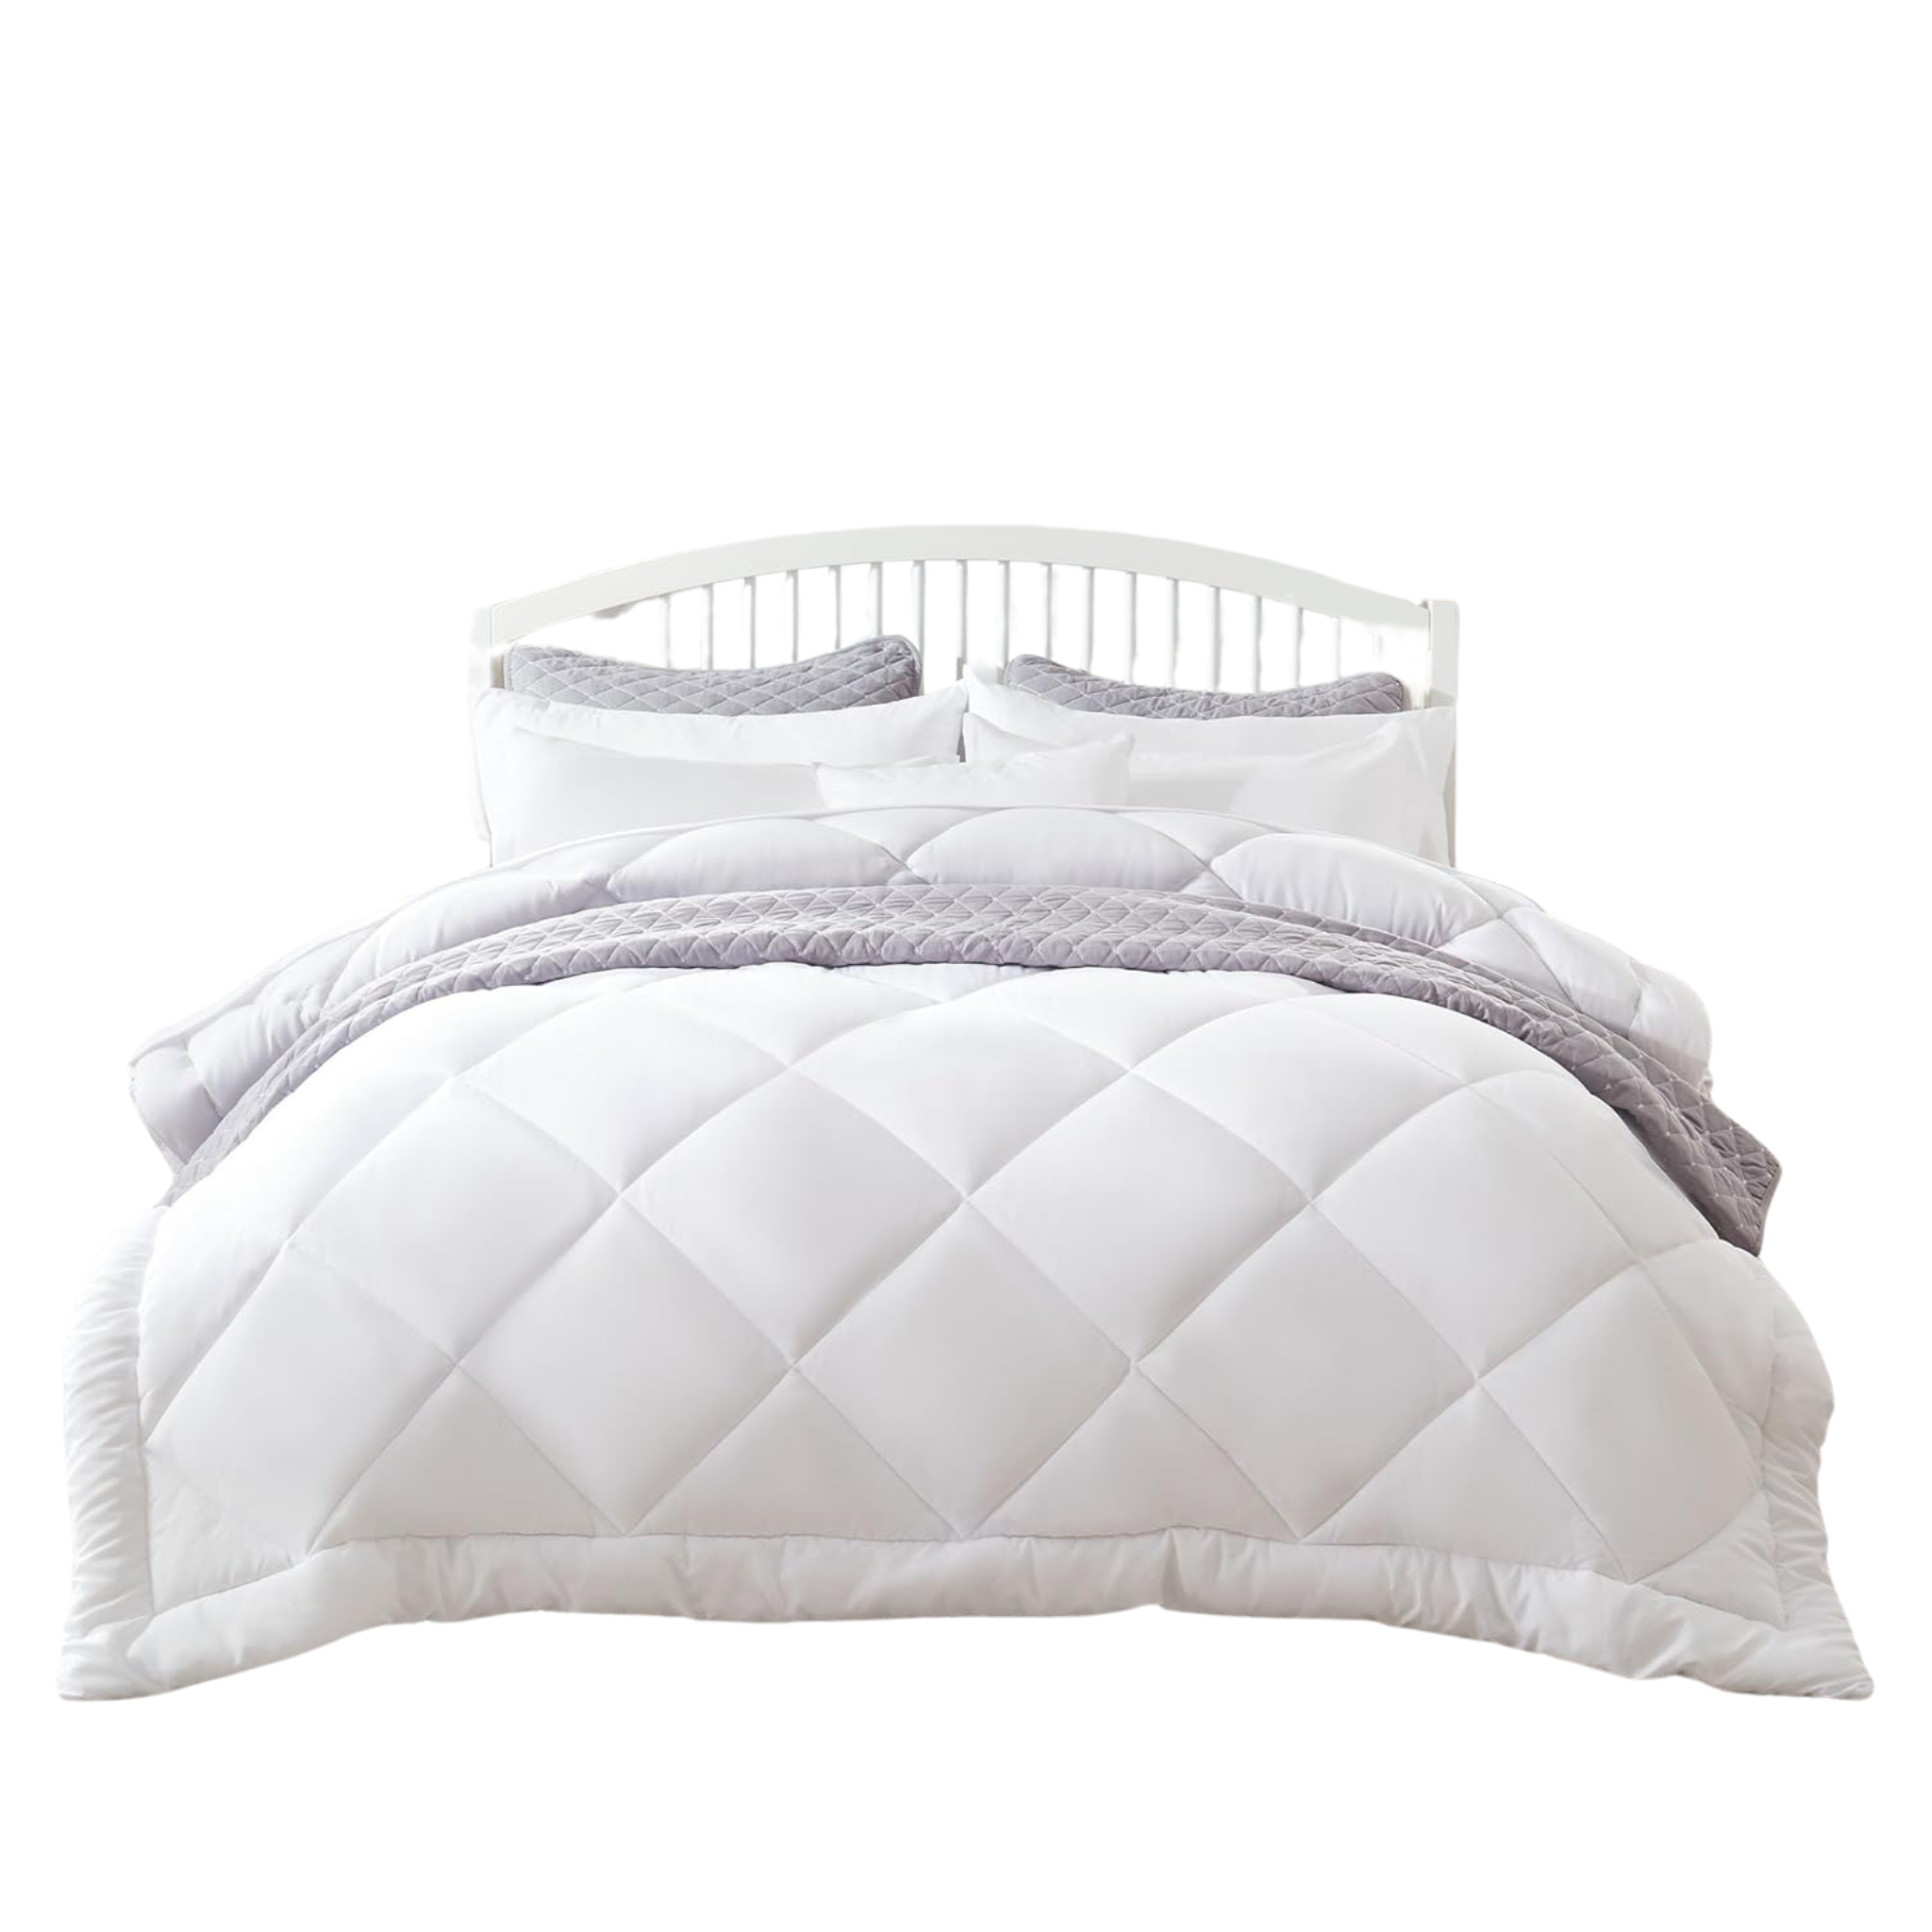 Queen Duvet Insert Reversible Comforter, Lightweight